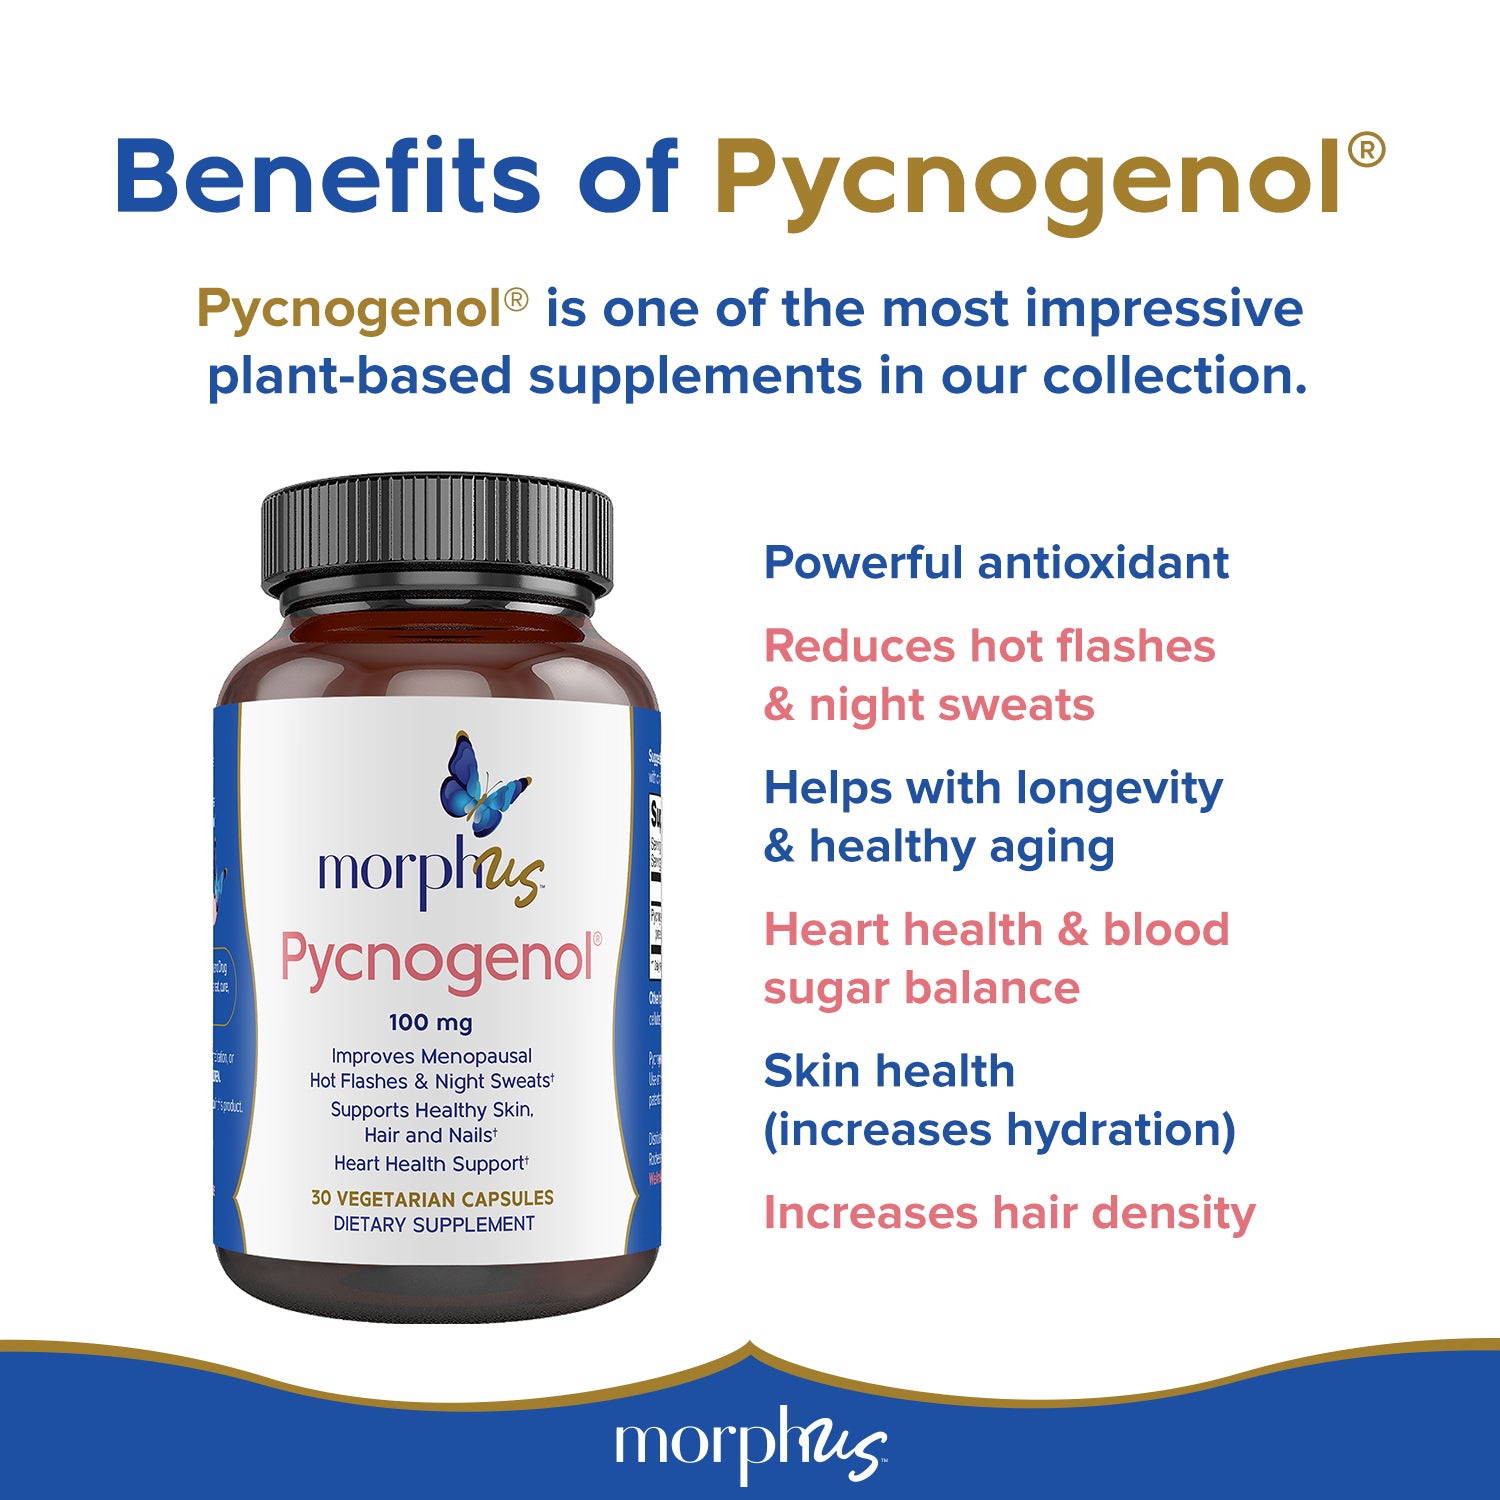 Pycnogenol and sleep quality